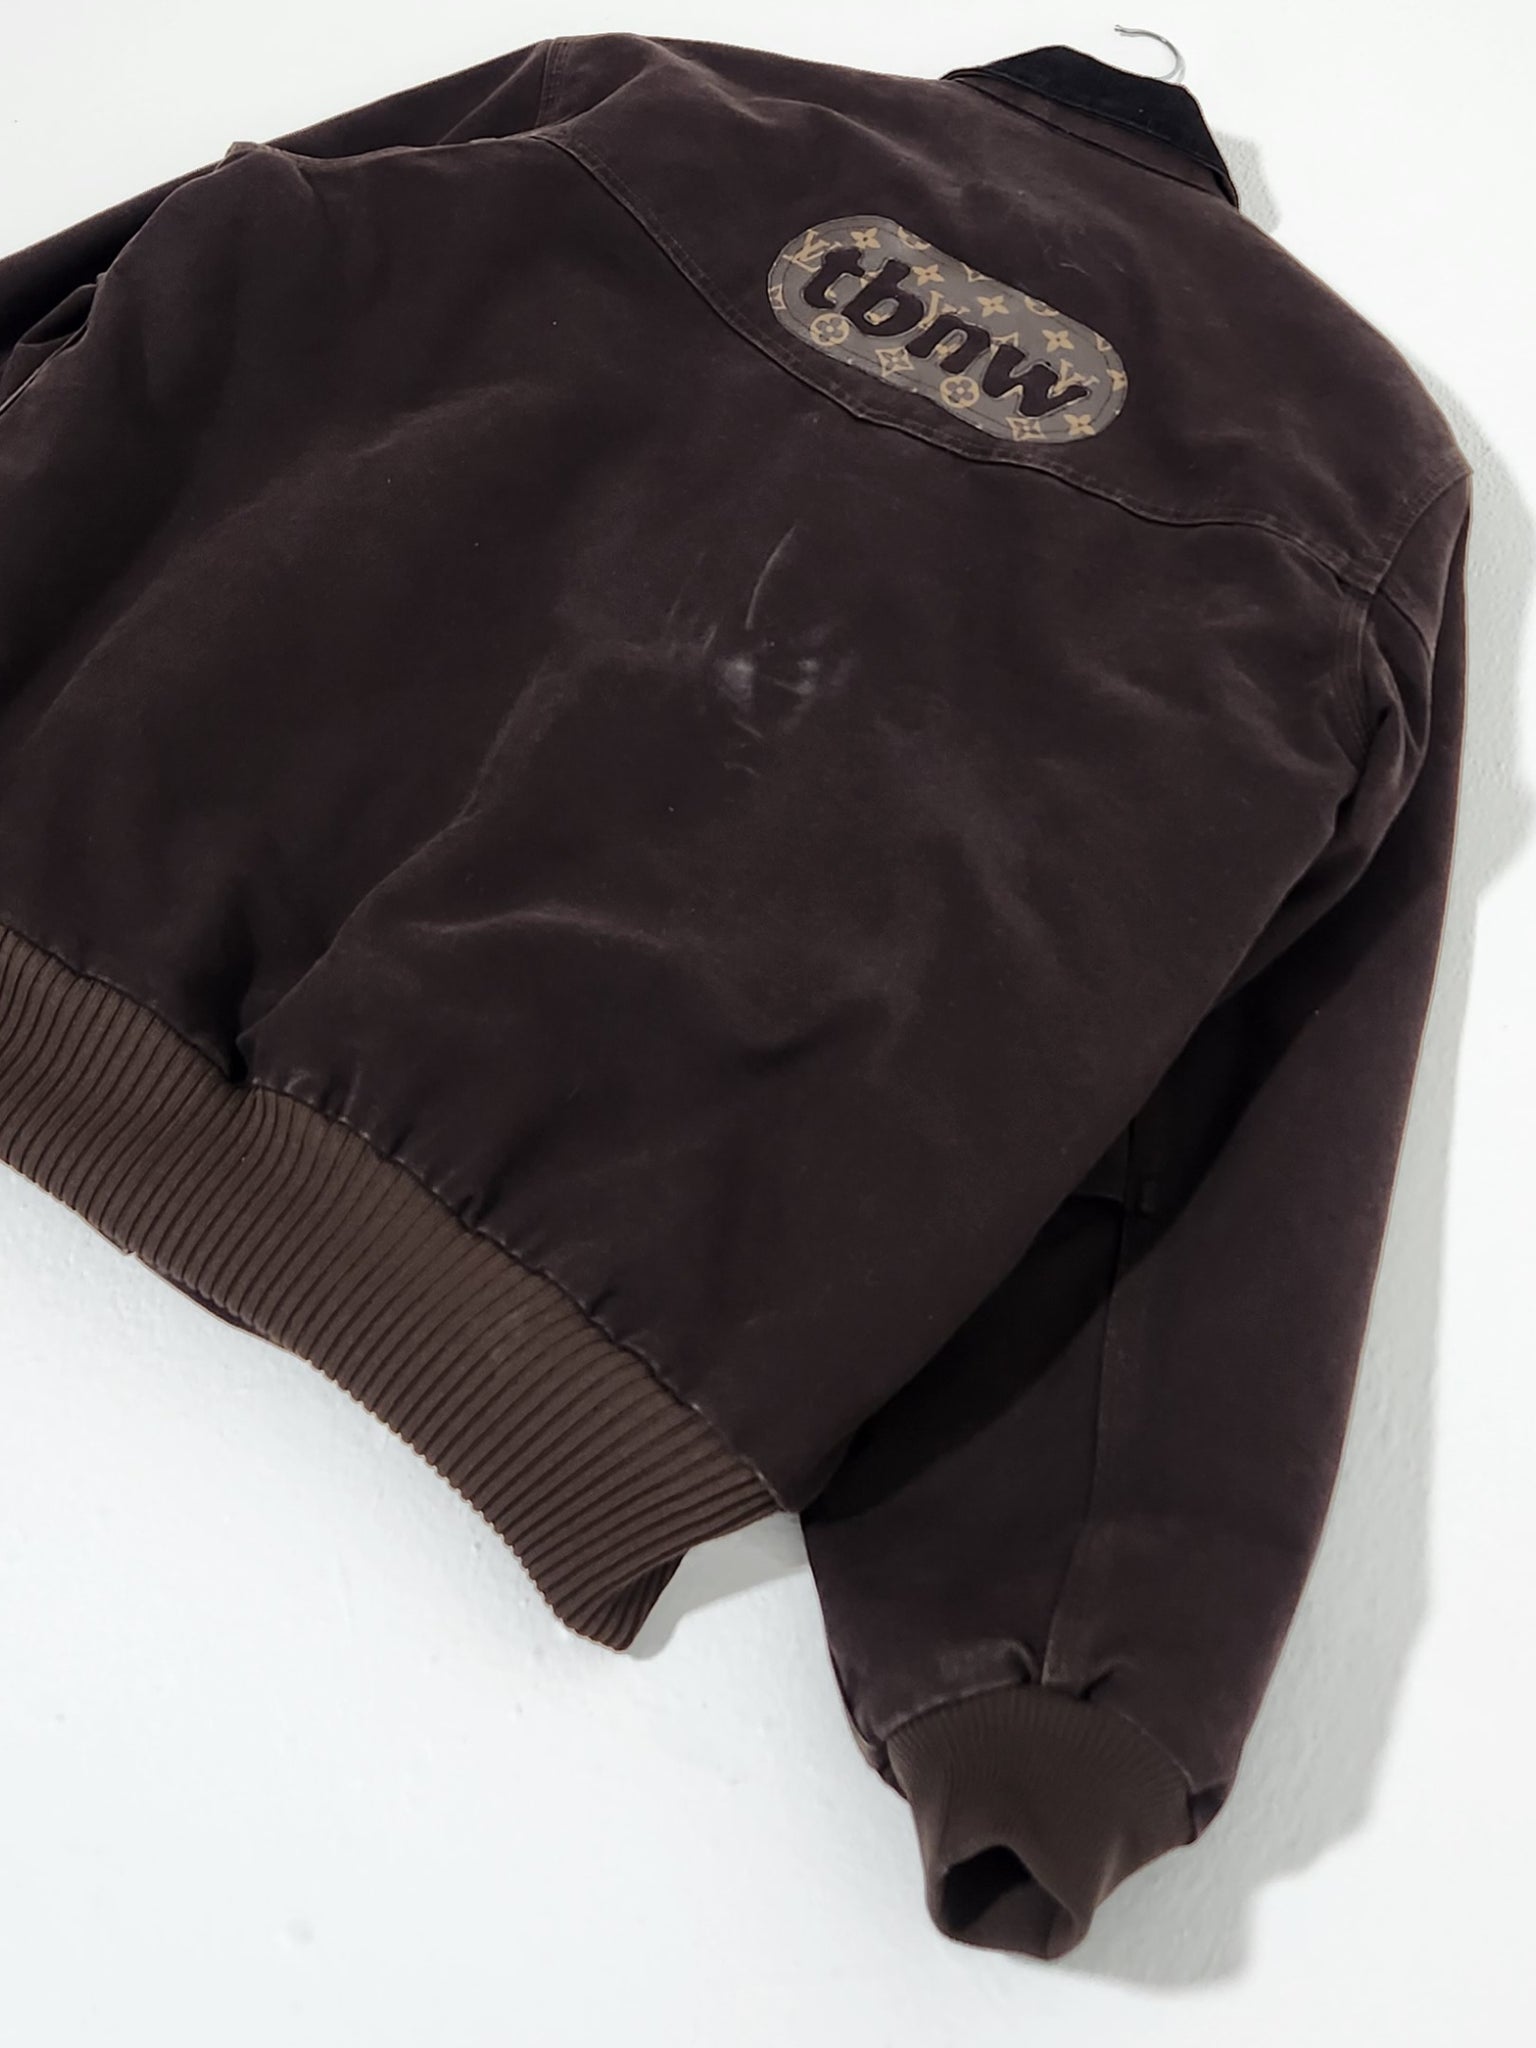 Vintage 1990s STARTER Seattle Mariners Leather Jacket Sz. 2XL